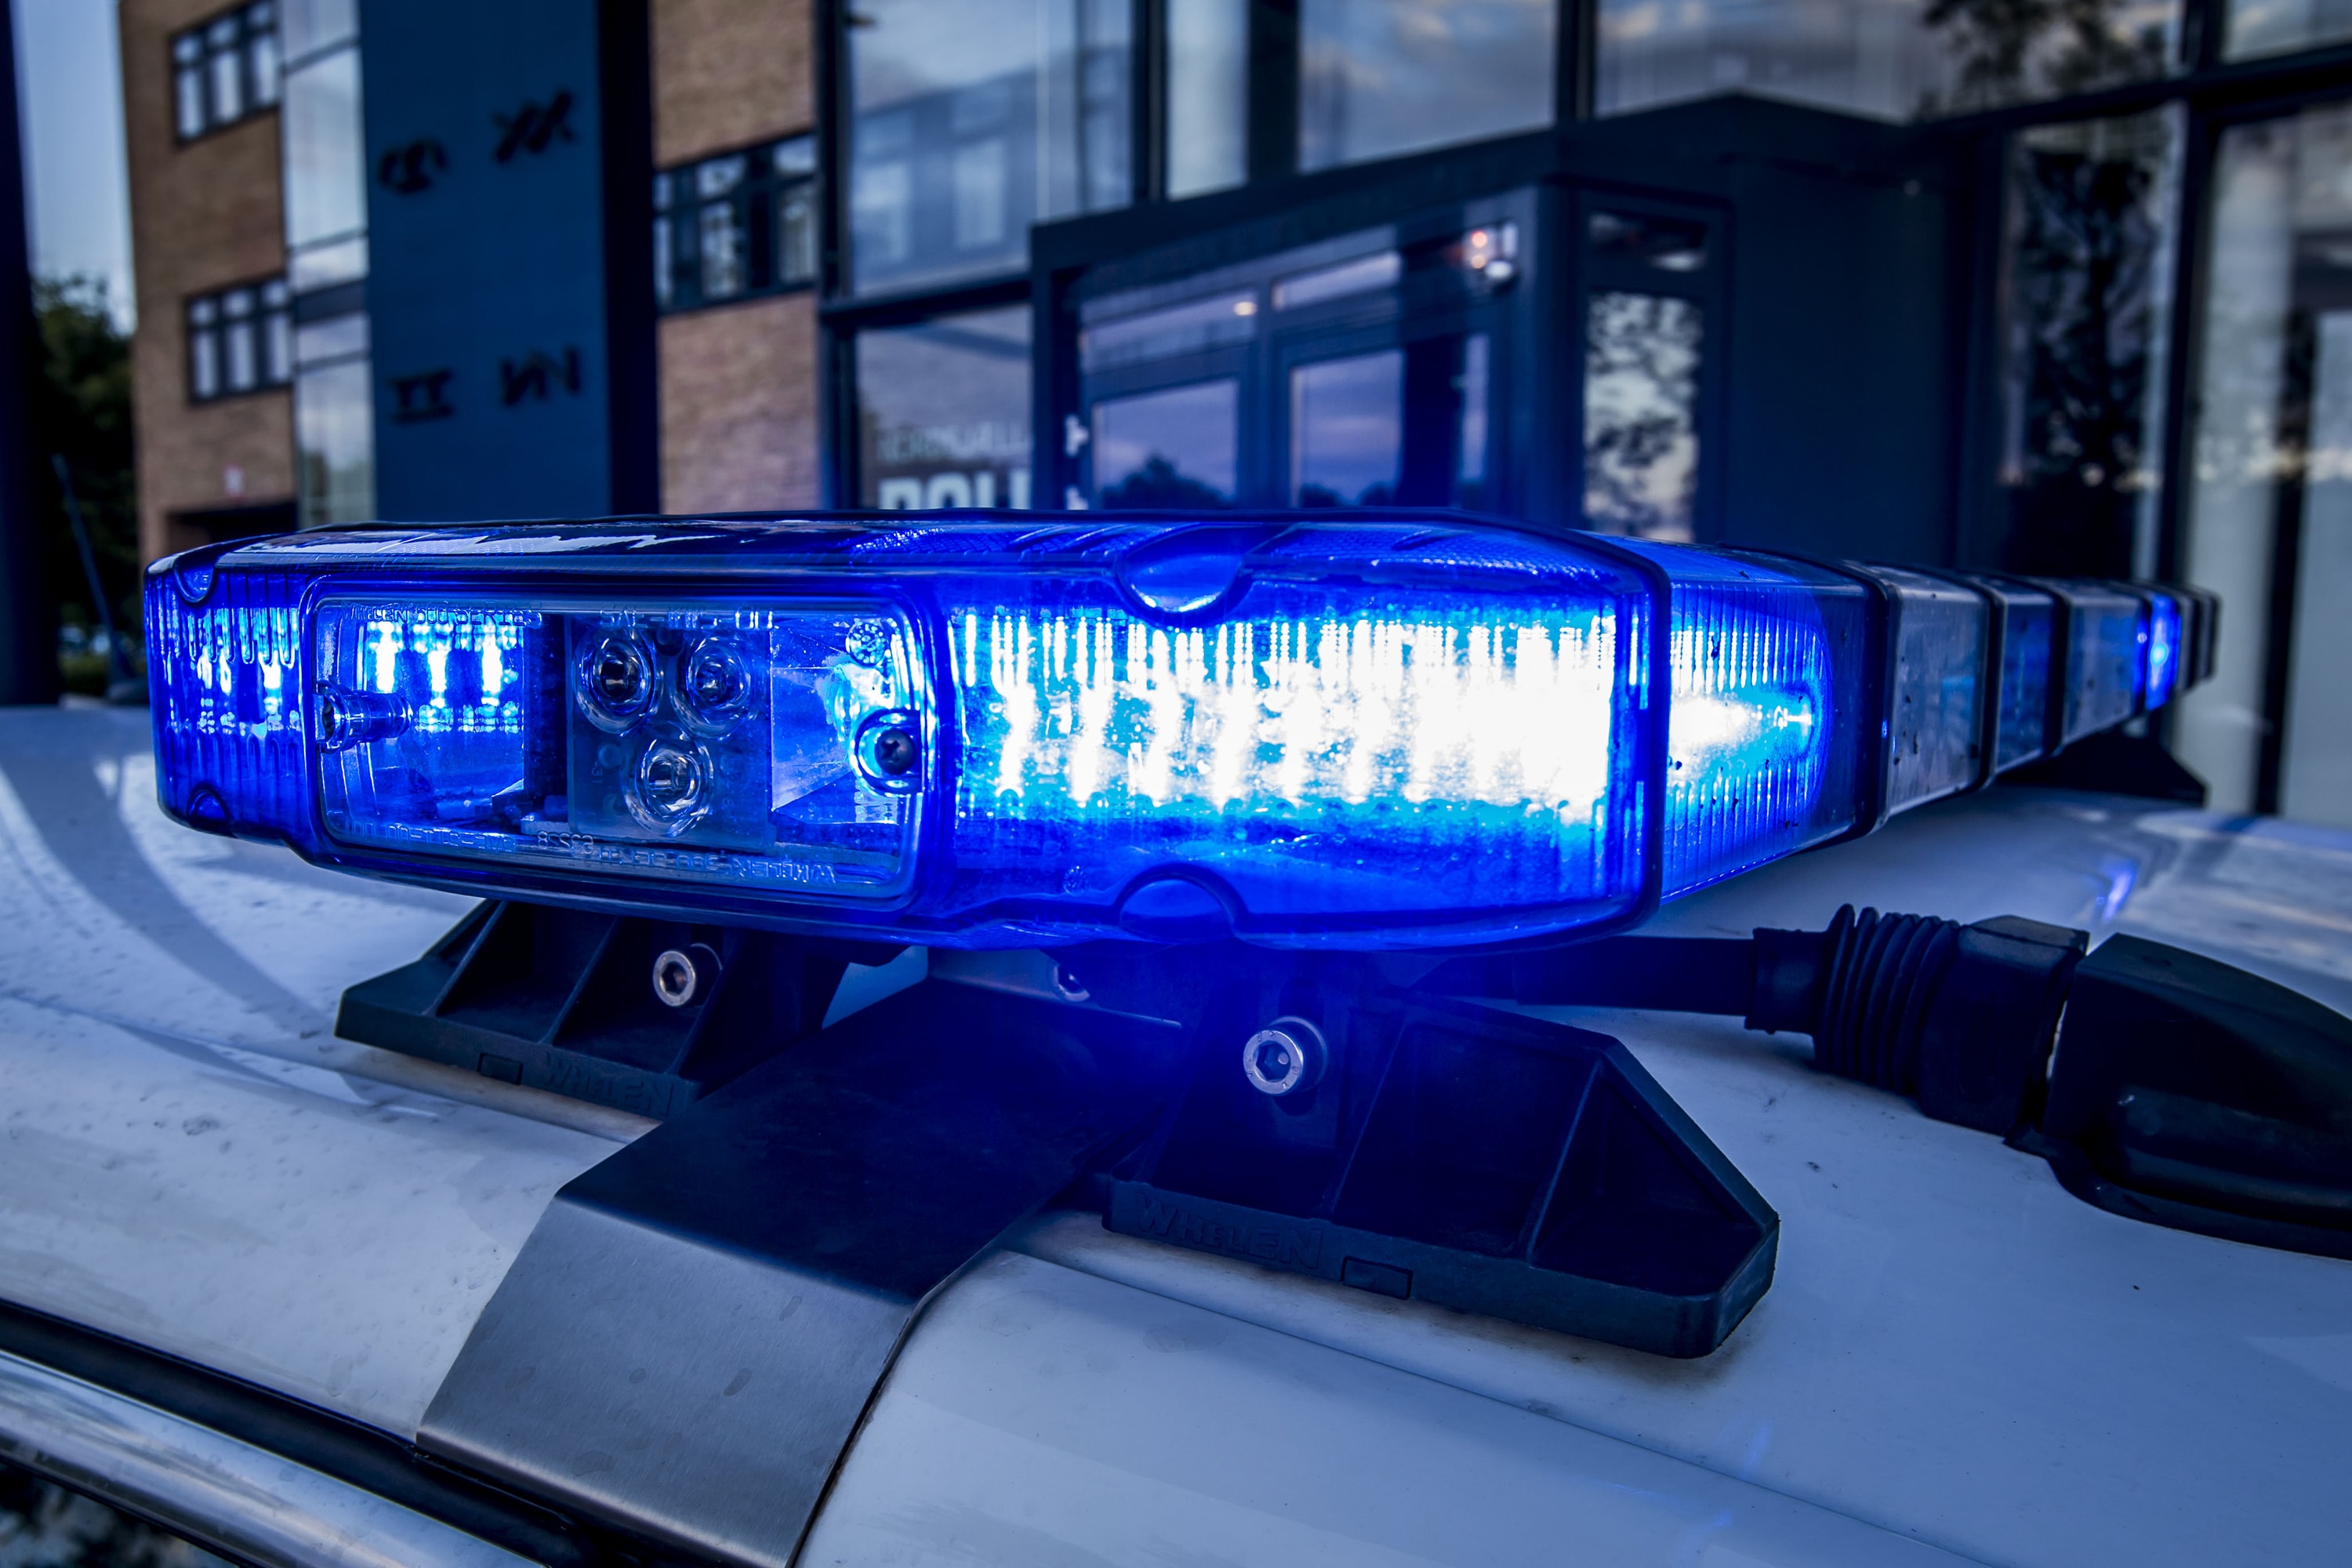 47-jähriger Mann verhaftet, weil er in Slagelse 13 Brände gelegt hat